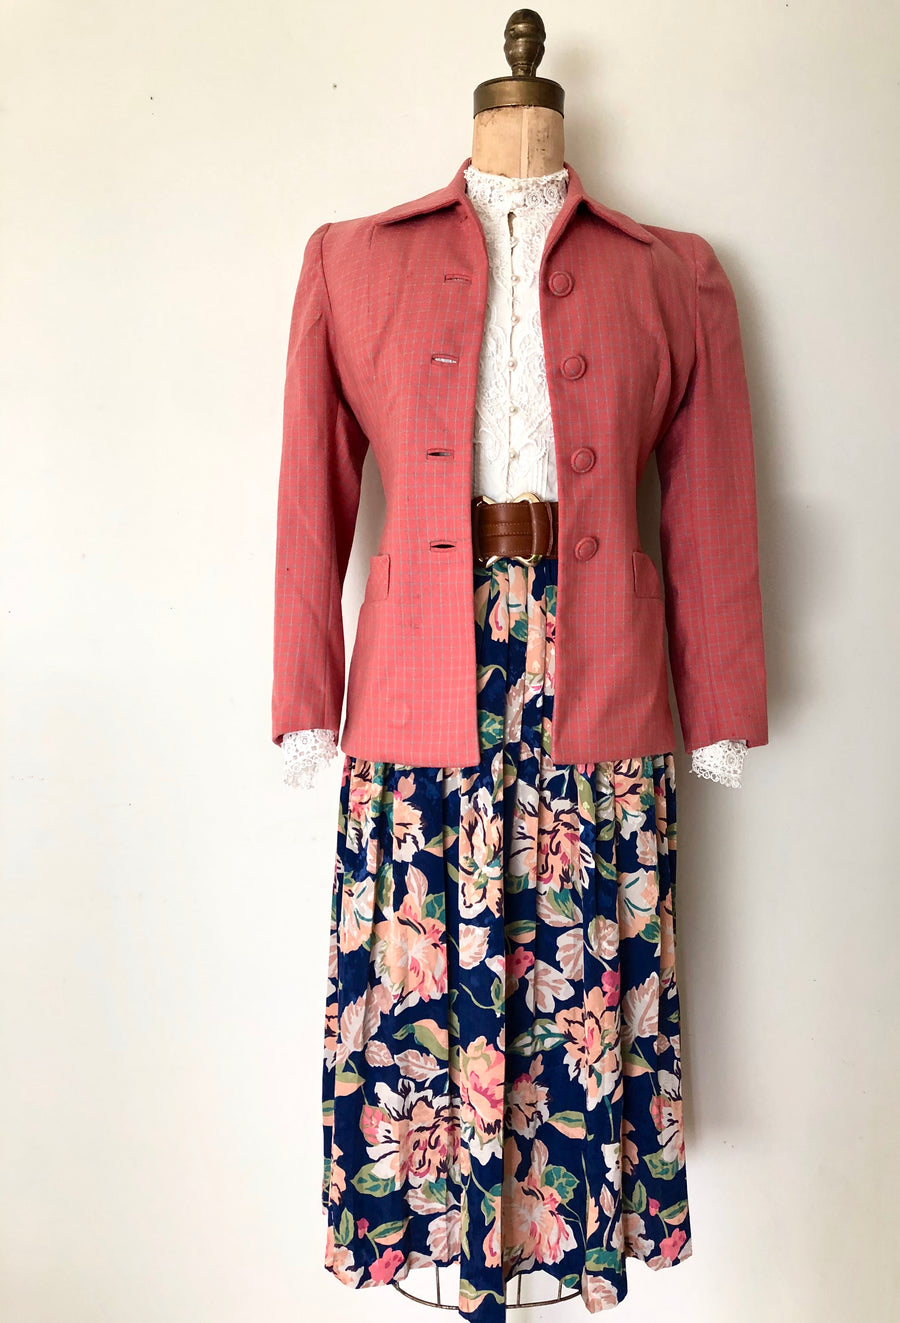 Vintage Floral Midi Skirt - Size M/L